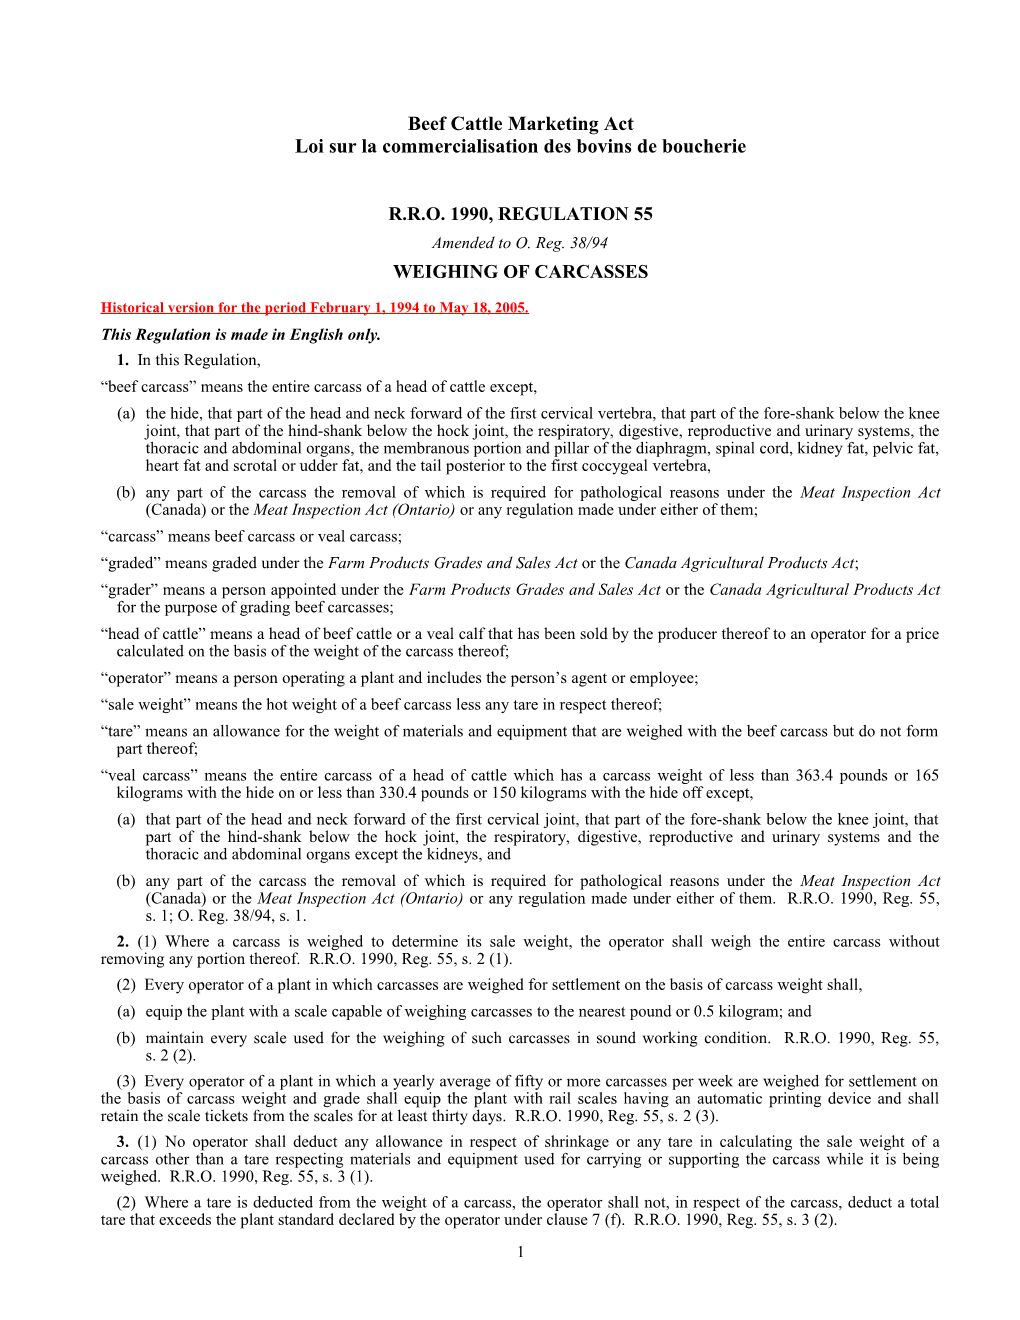 Beef Cattle Marketing Act - R.R.O. 1990, Reg. 55